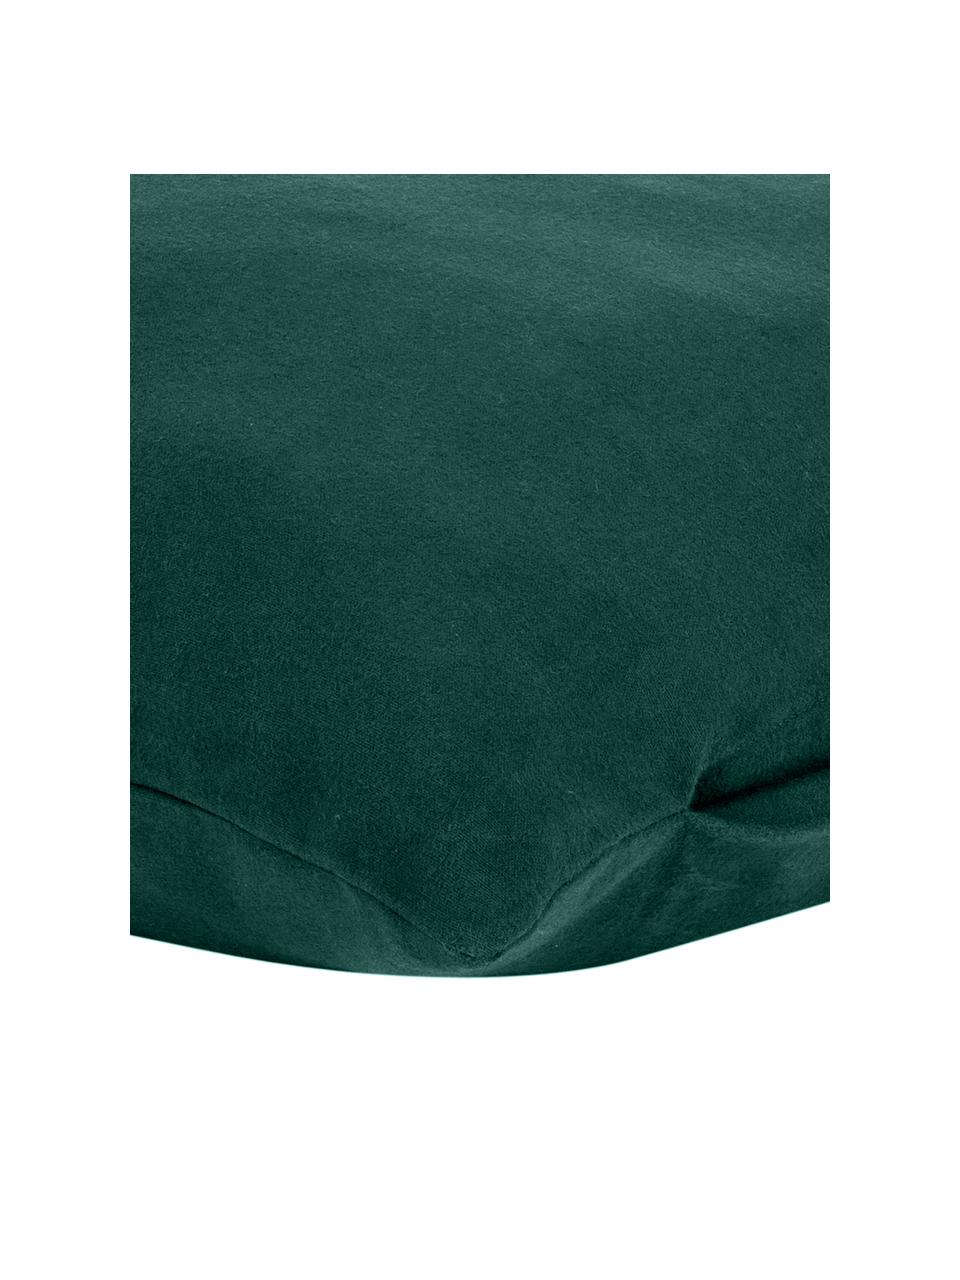 Flanell-Kissenbezüge Biba in Waldgrün, 2 Stück, Webart: Flanell Flanell ist ein k, Waldgrün, B 40 x L 80 cm